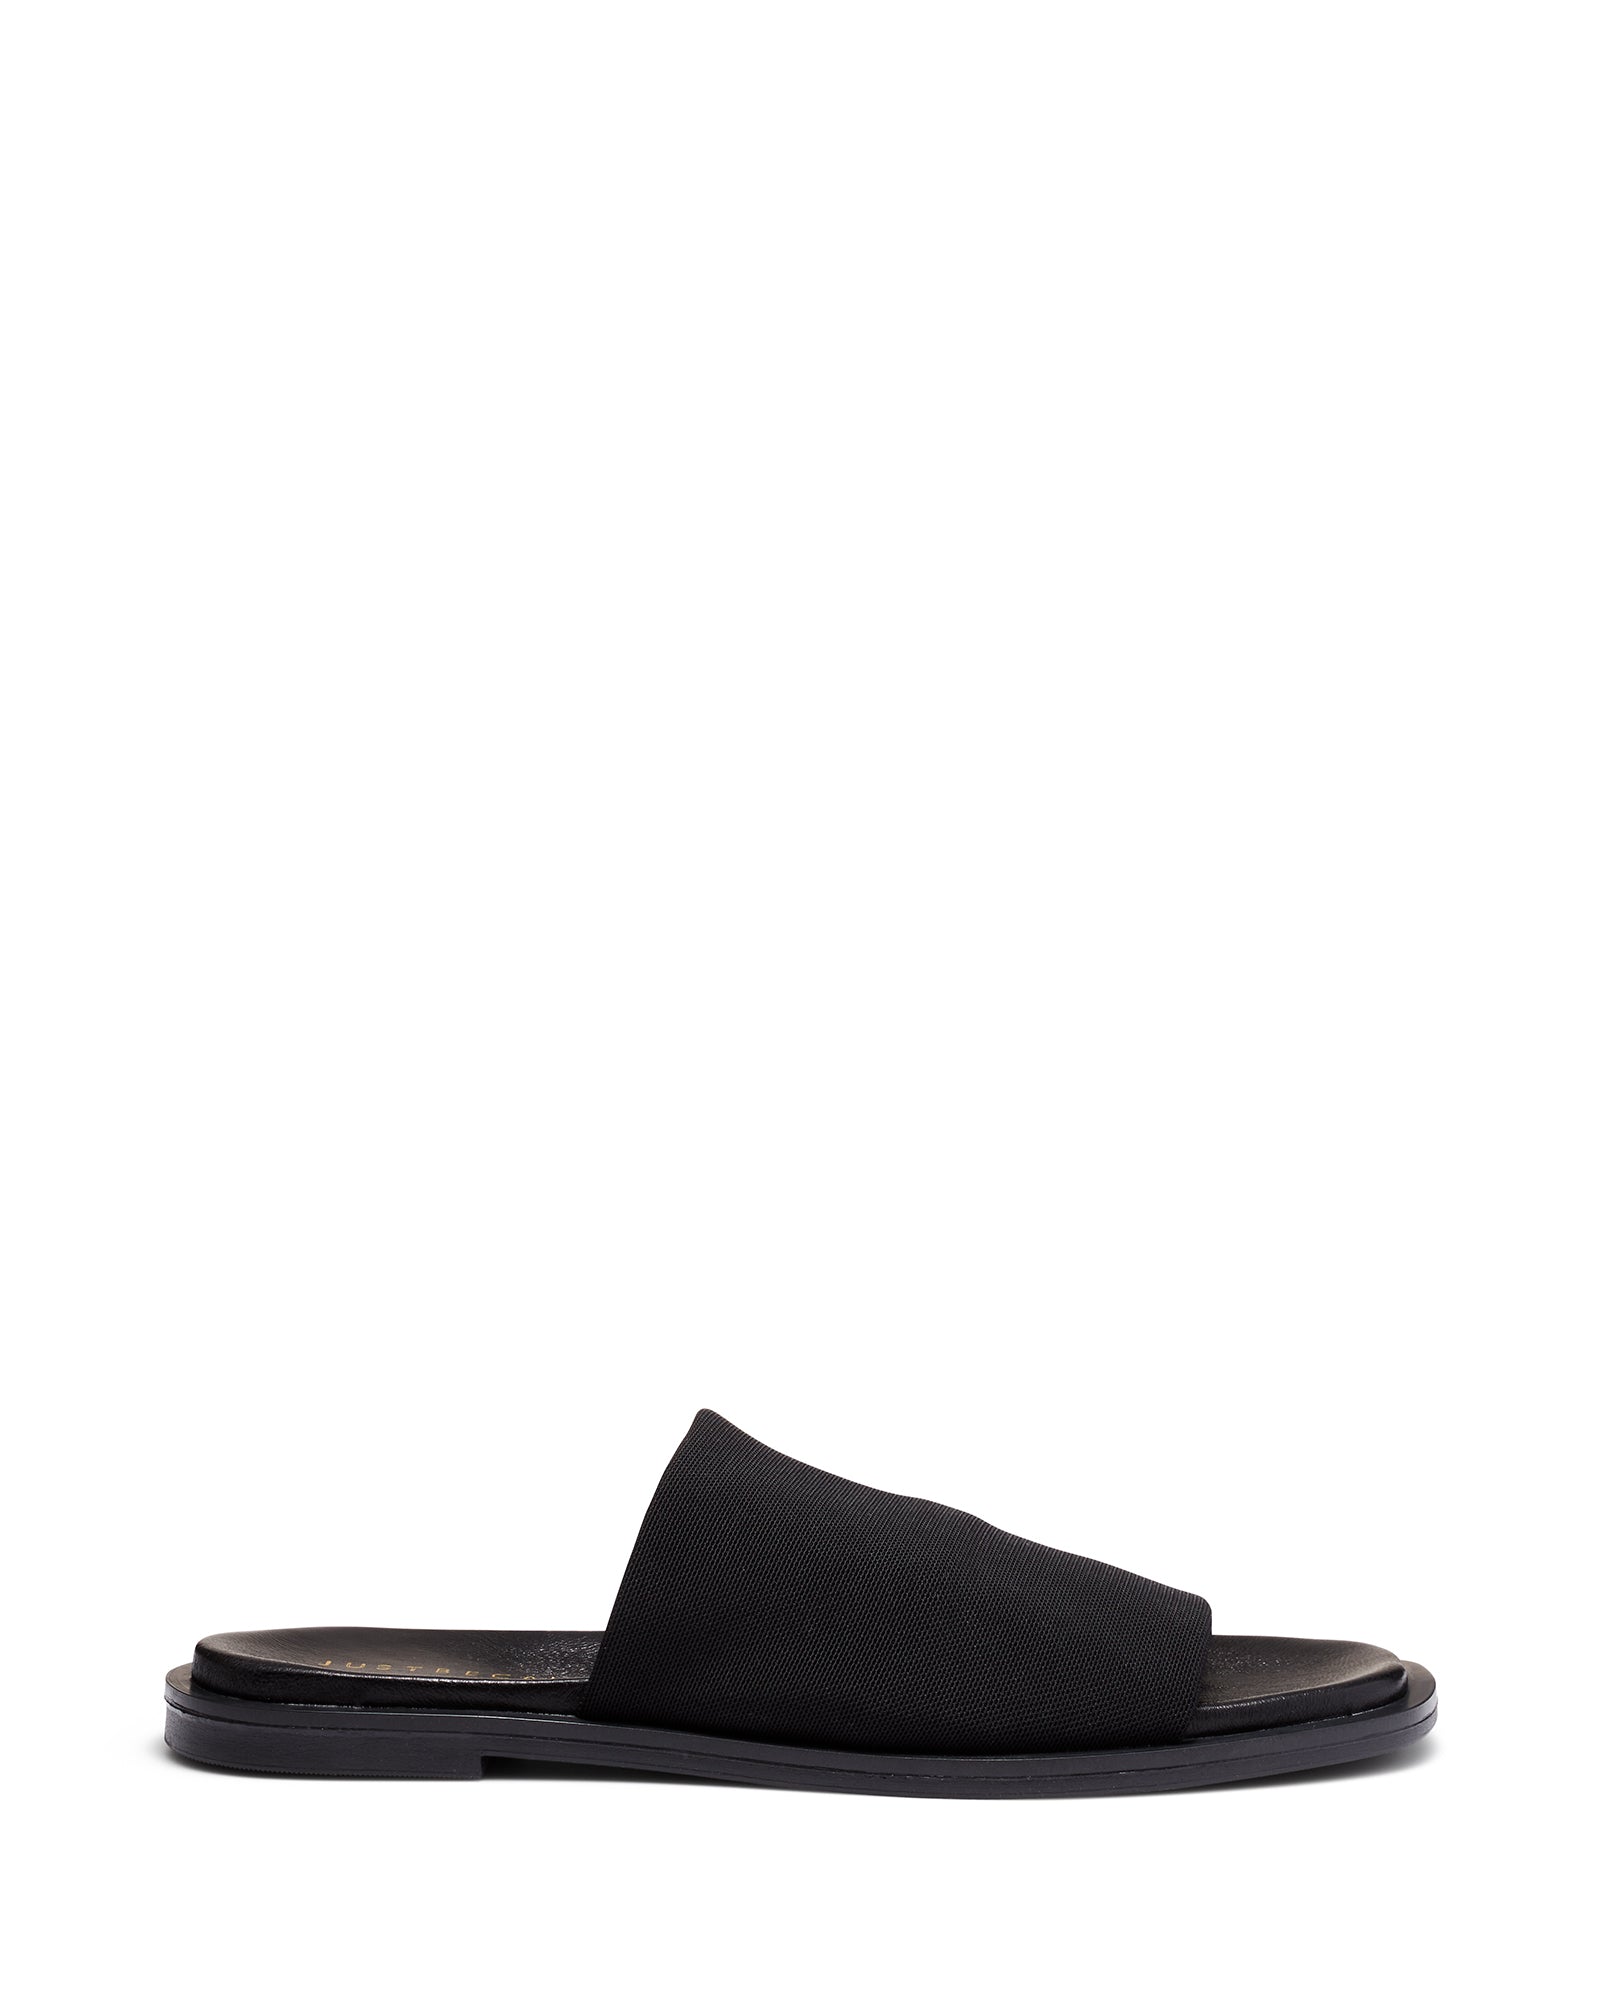 Just Because Shoes Dino Black Mesh | Sandals | Slides | Flats 